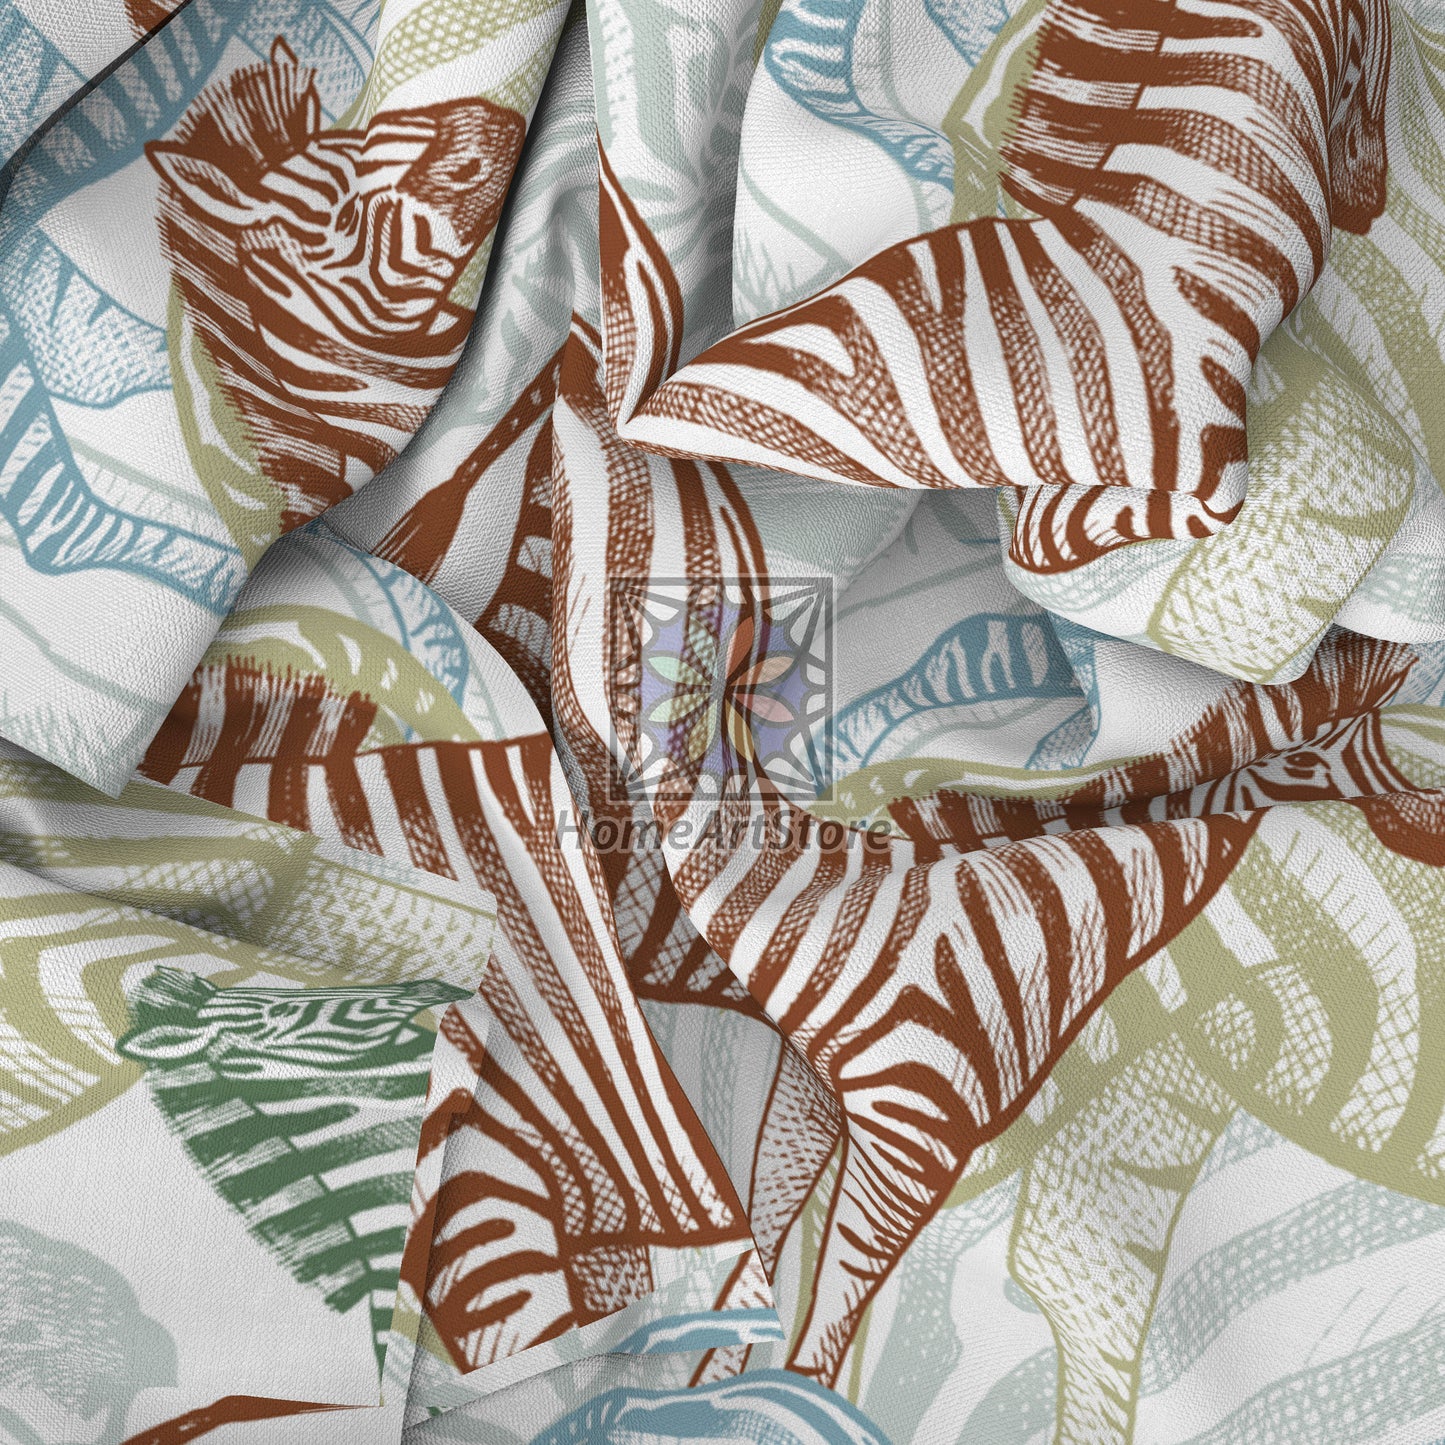 Colorful Zebra Pattern Curtain, African Animal Curtain, Safari Theme Decor, Nursey Curtain